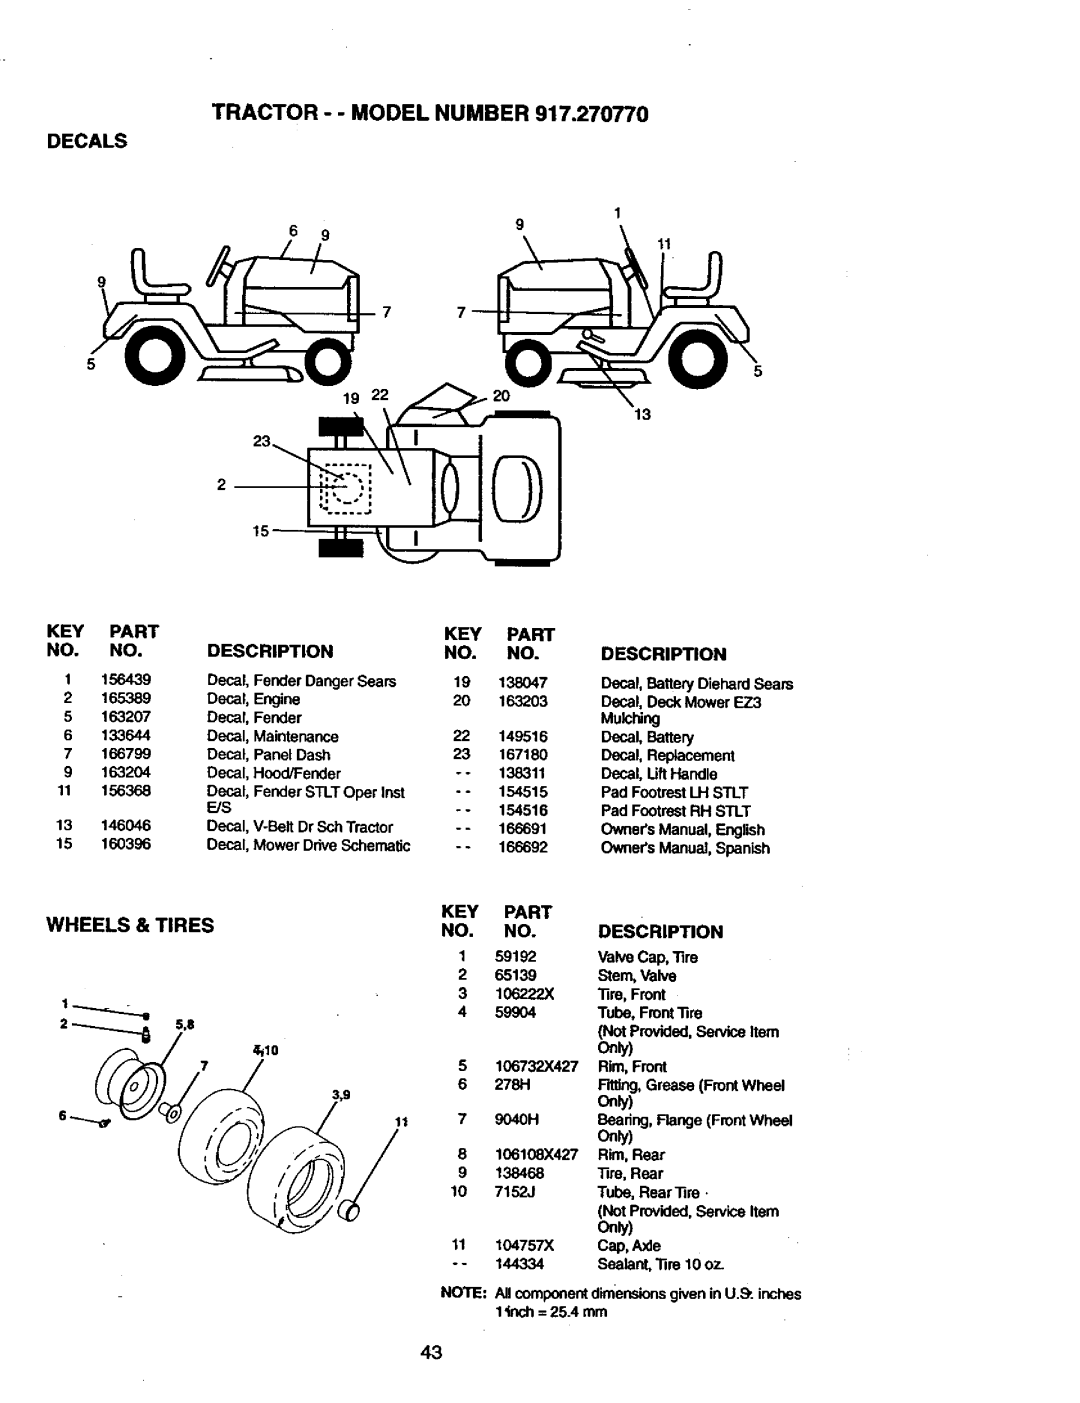 Craftsman 917.27077 manual Decals, Tractor - - Model Number 